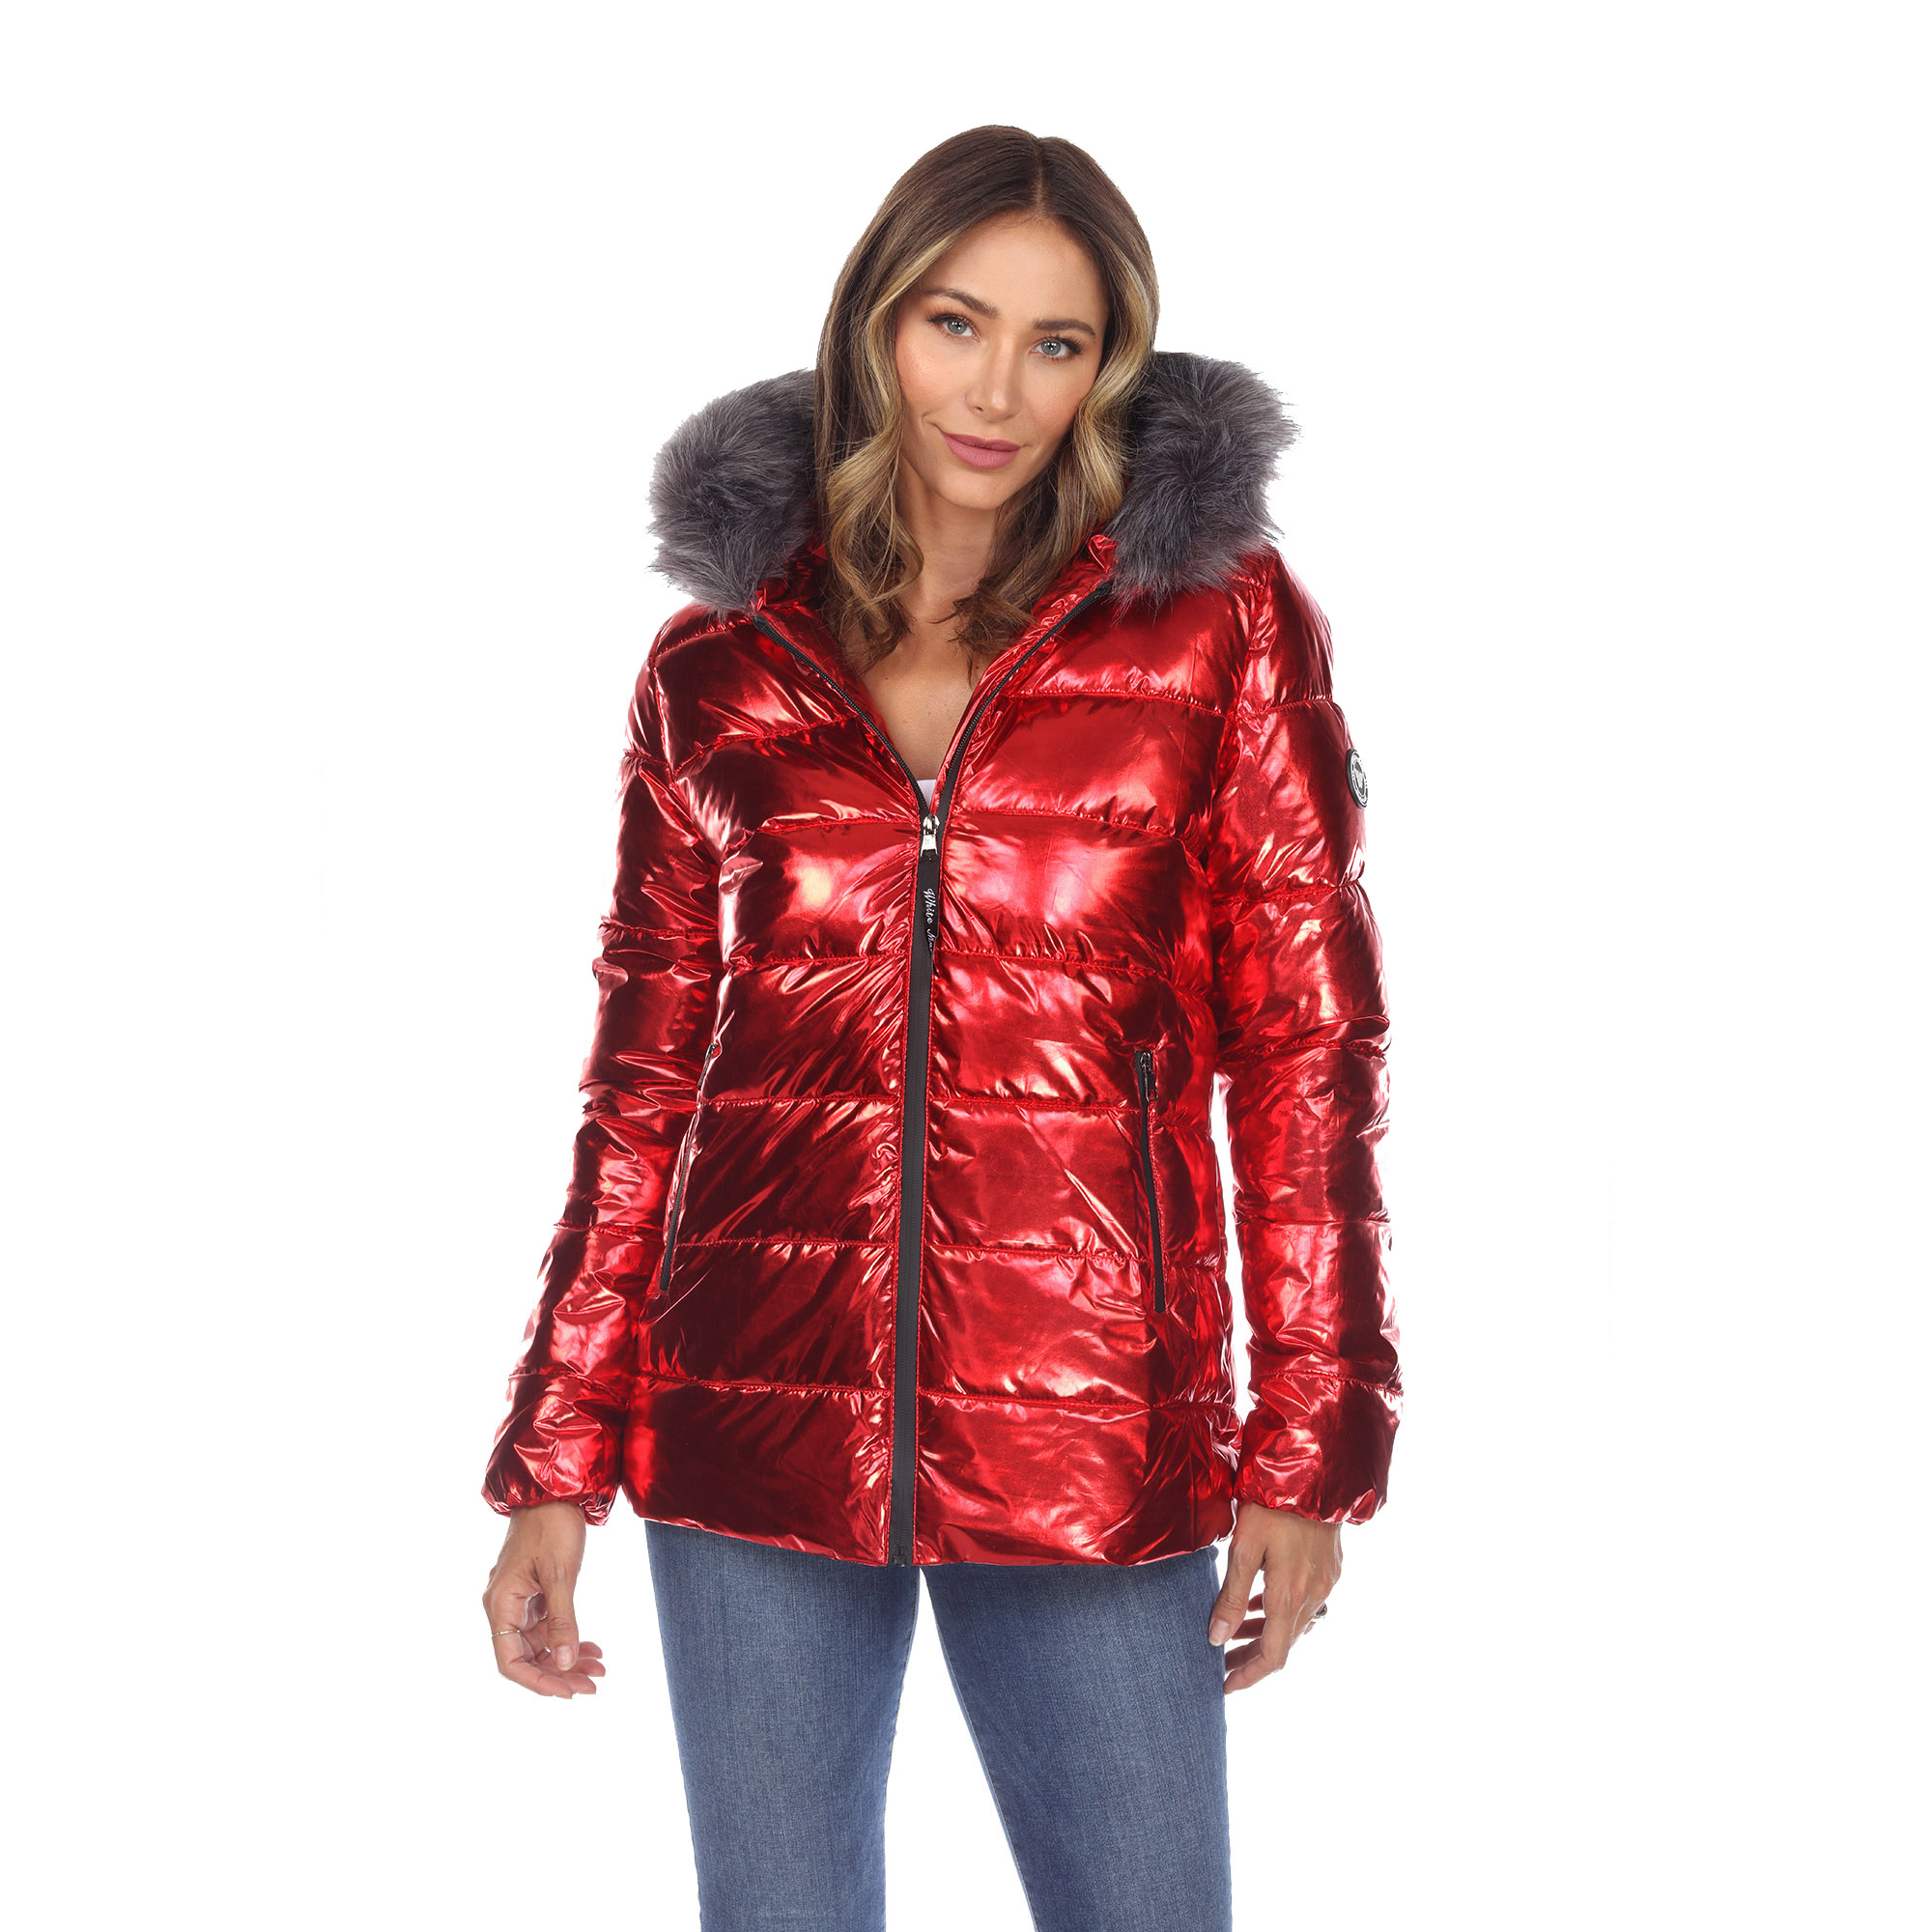 White Mark Womenâs Metallic Puffer Coat With Hoodie - Red, X-Large